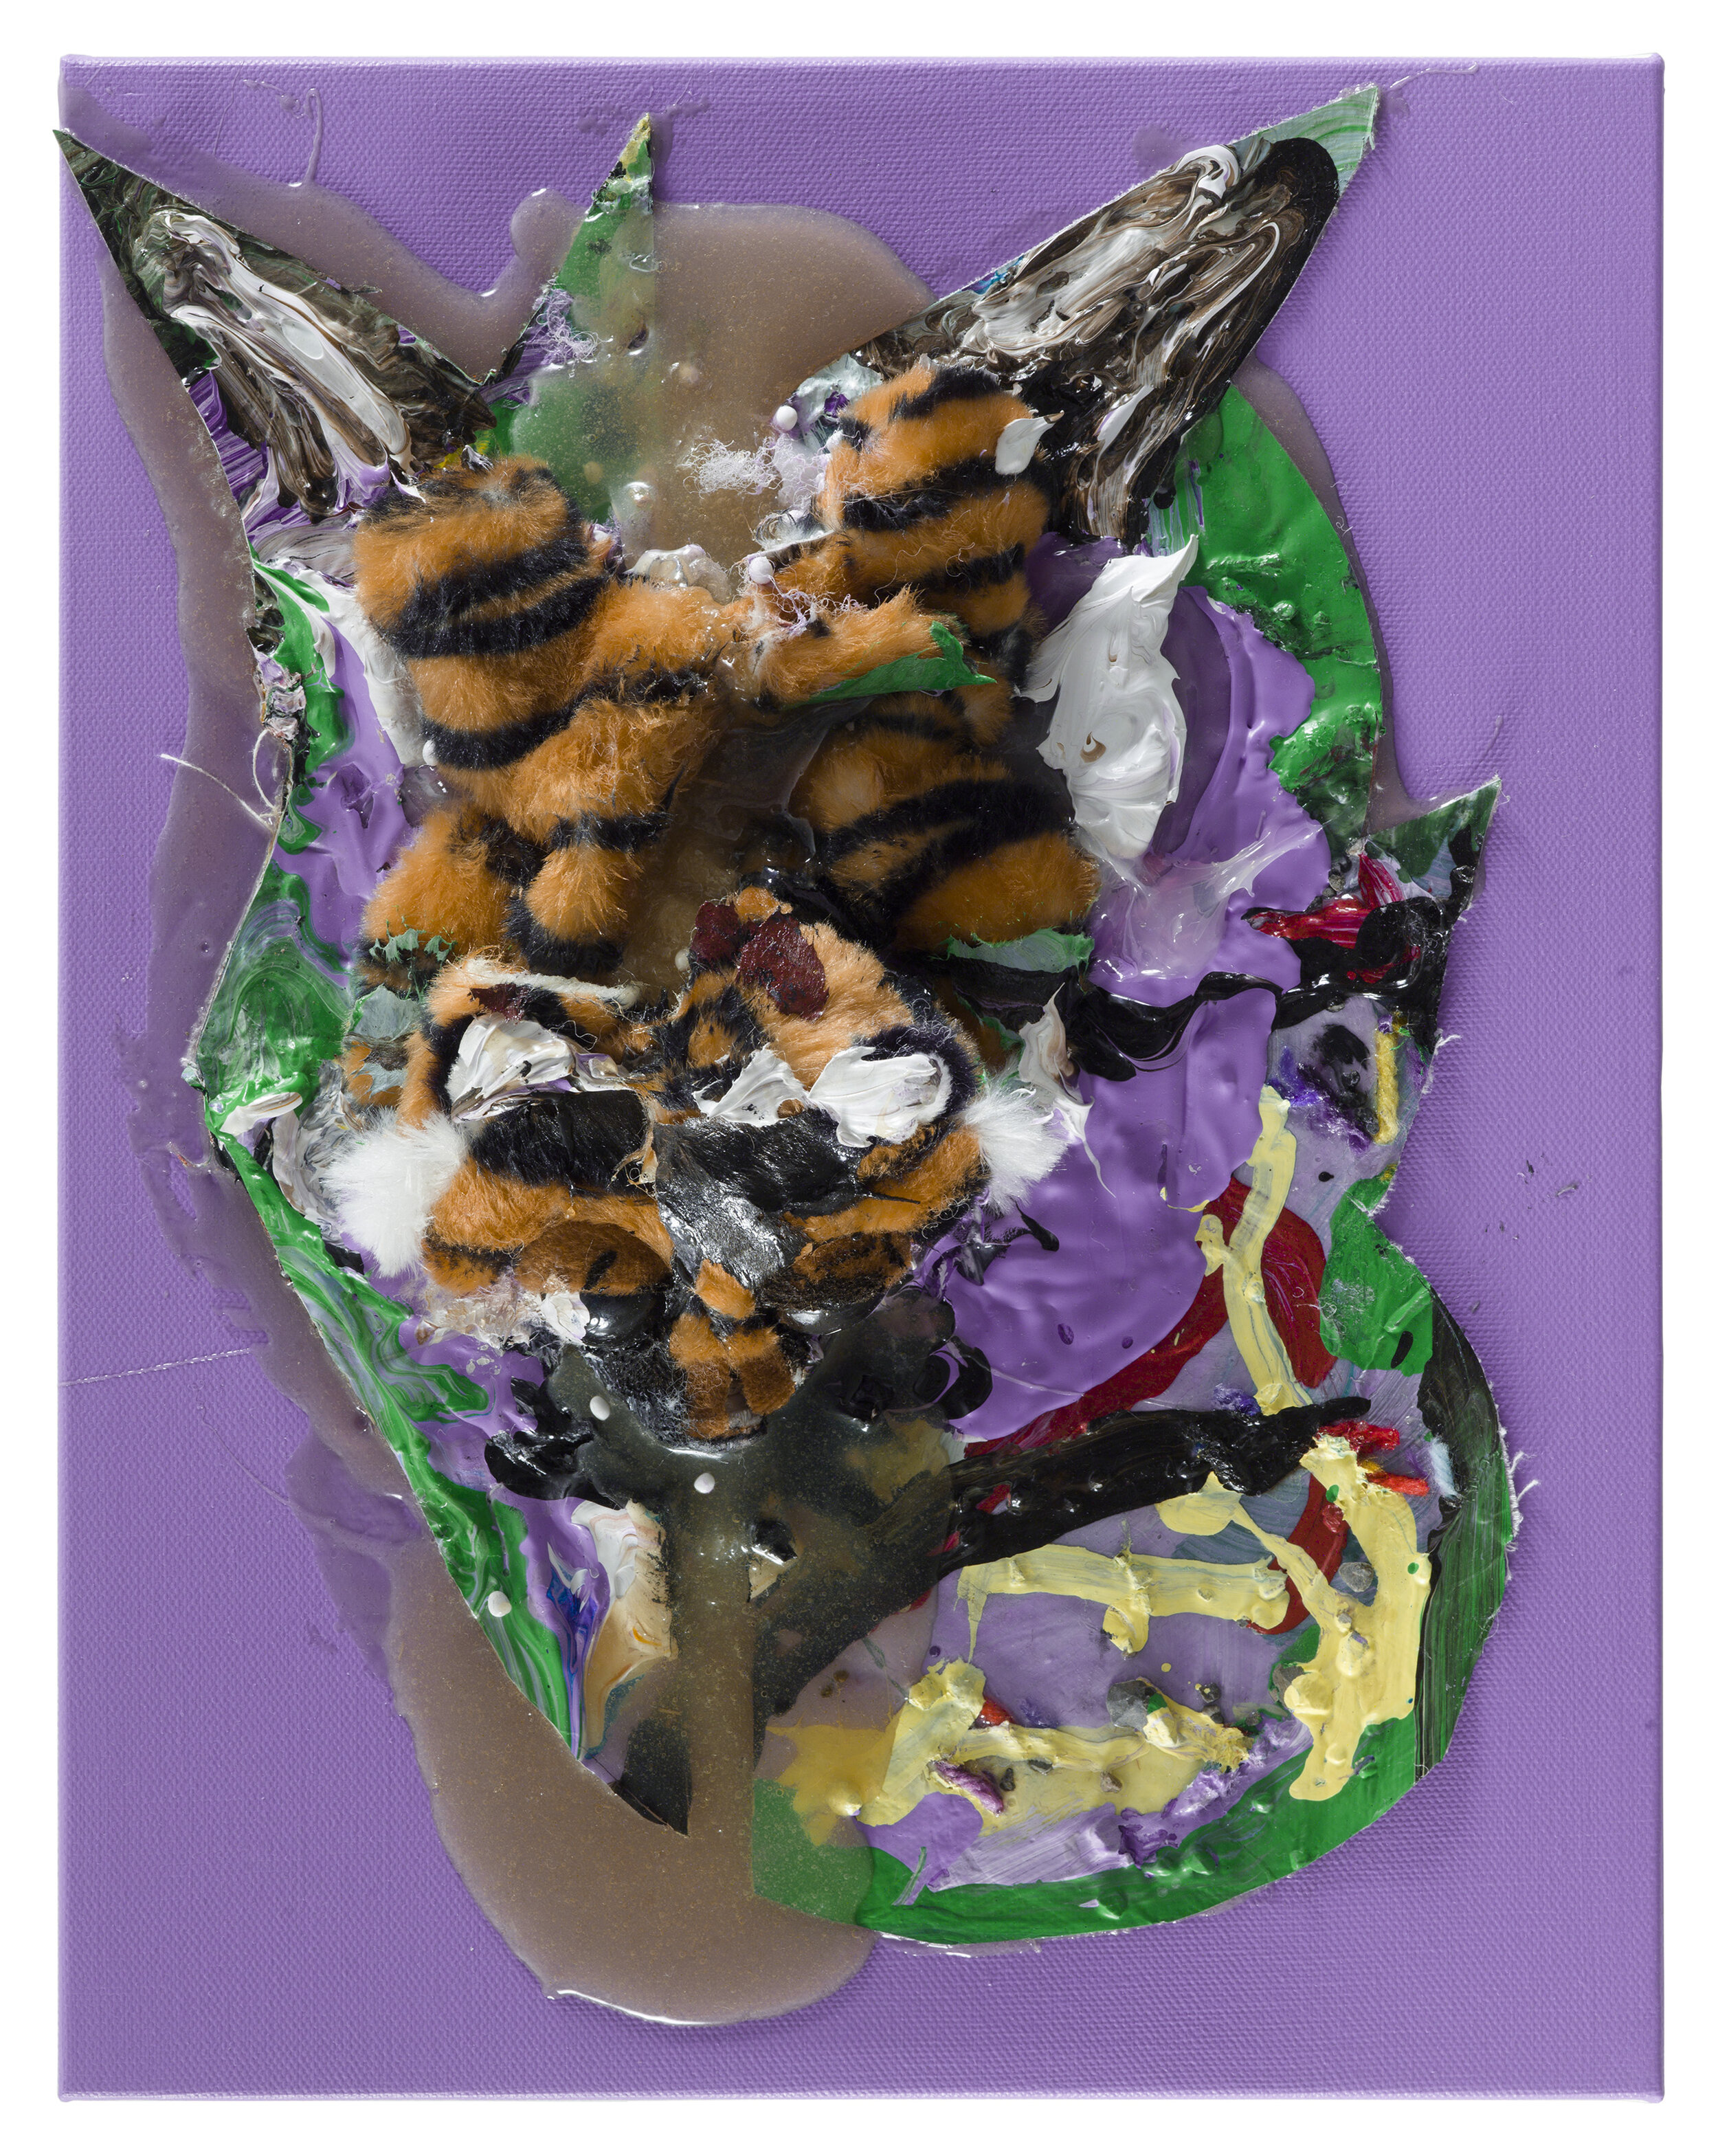  Drew Beattie  Isn’tness   2018 acrylic, cut canvas, stuffed animal and epoxy on canvas 14 x 11 inches 